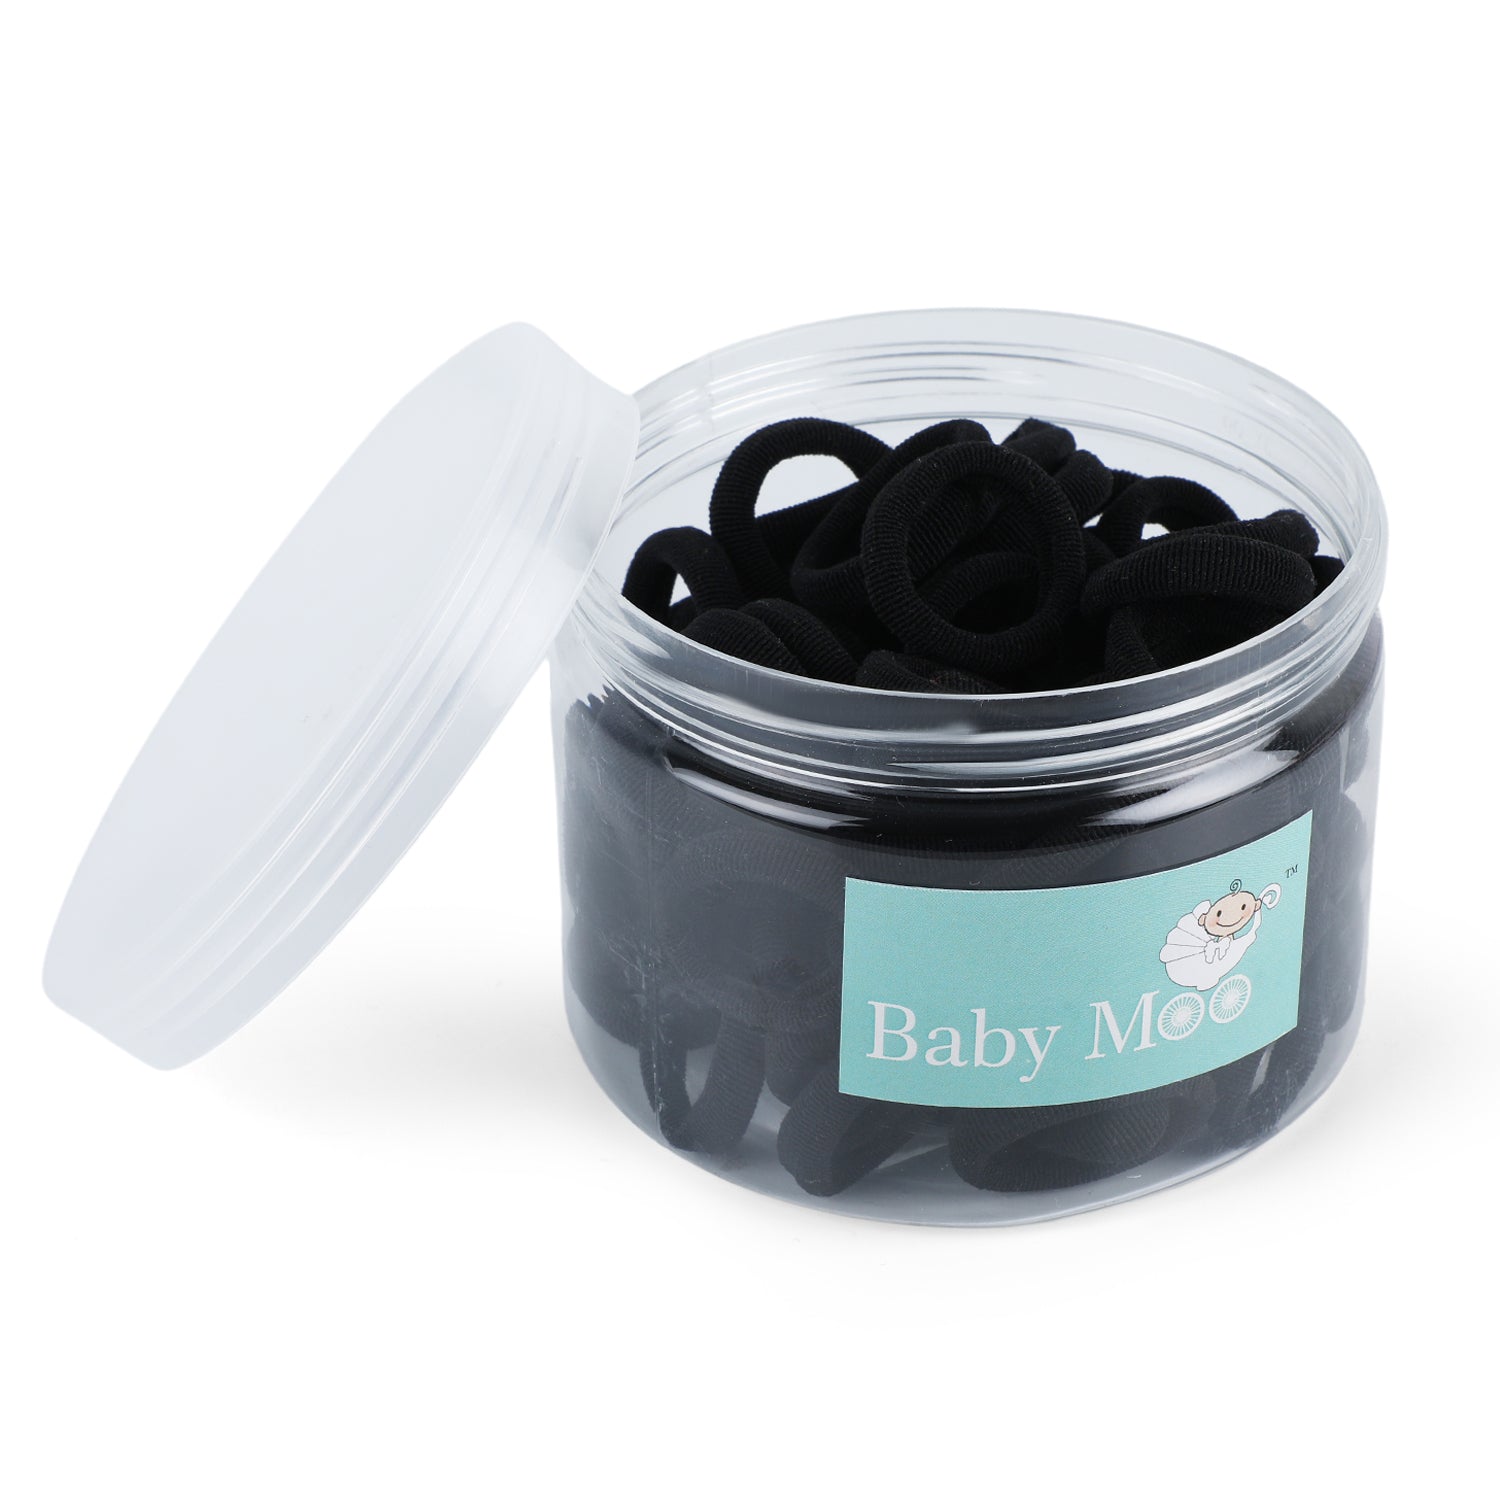 Mini Rubber Bands Soft Stretch Hair Elastic 100 Pcs - Black - Baby Moo